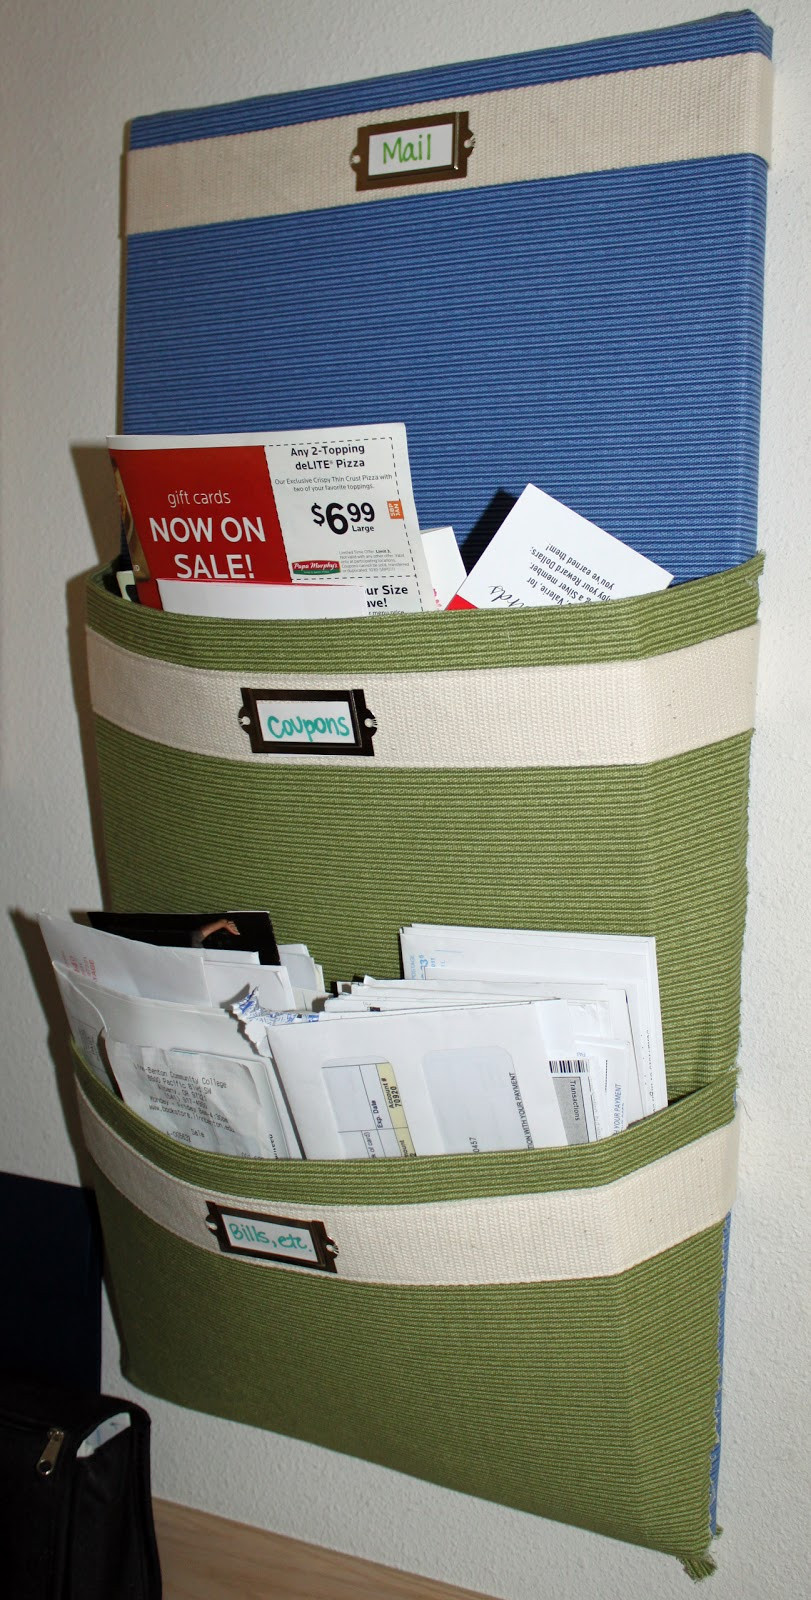 Best ideas about Mail Organizer DIY
. Save or Pin Purplest Pecalin Still Spring Cleaning DIY Mail Organizer Now.